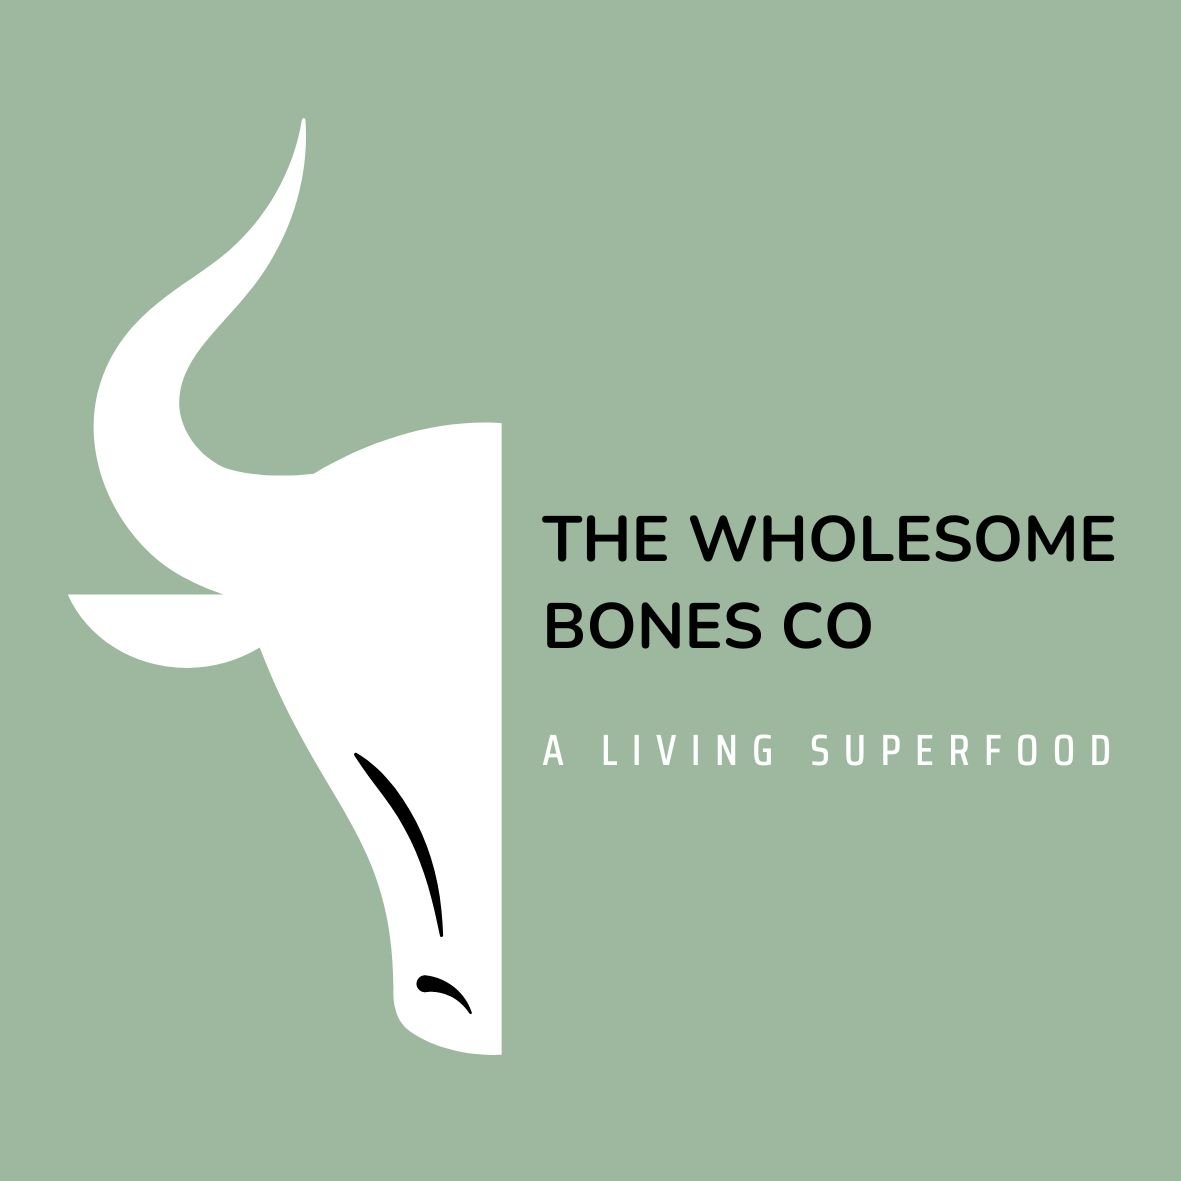 The Wholesome Bones Co